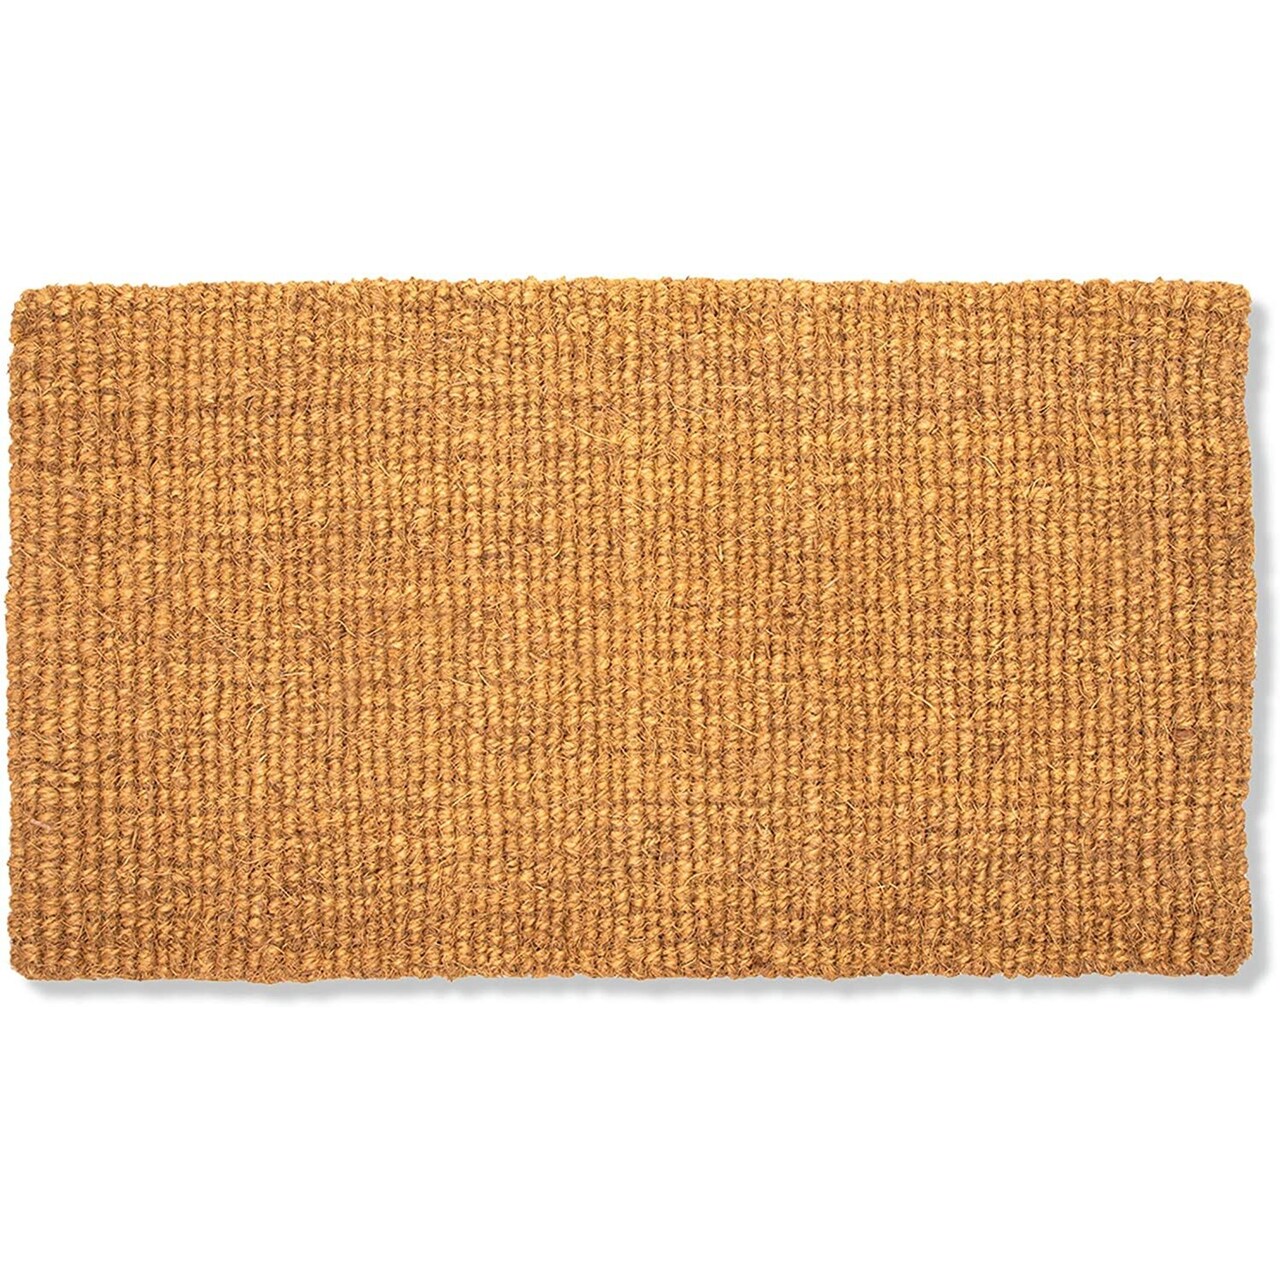 Plain Coco Coir Door Mat, Bare Natural Unadorned Doormat for